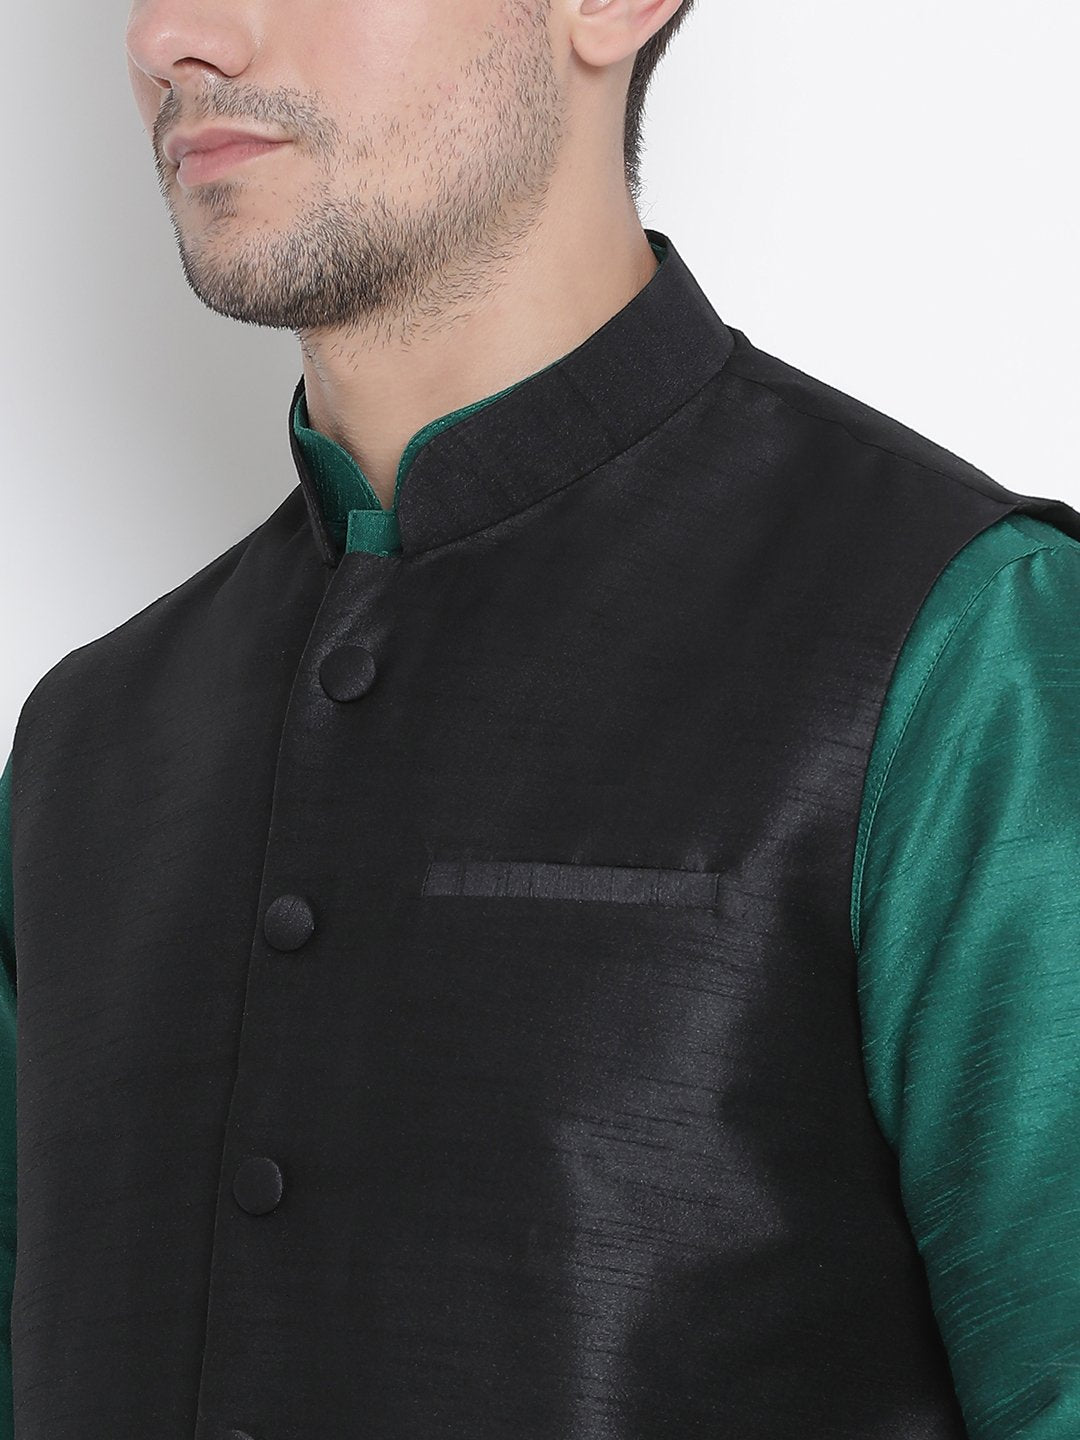 Men's Green Cotton Silk Blend Kurta, Ethnic Jacket and Pyjama Set